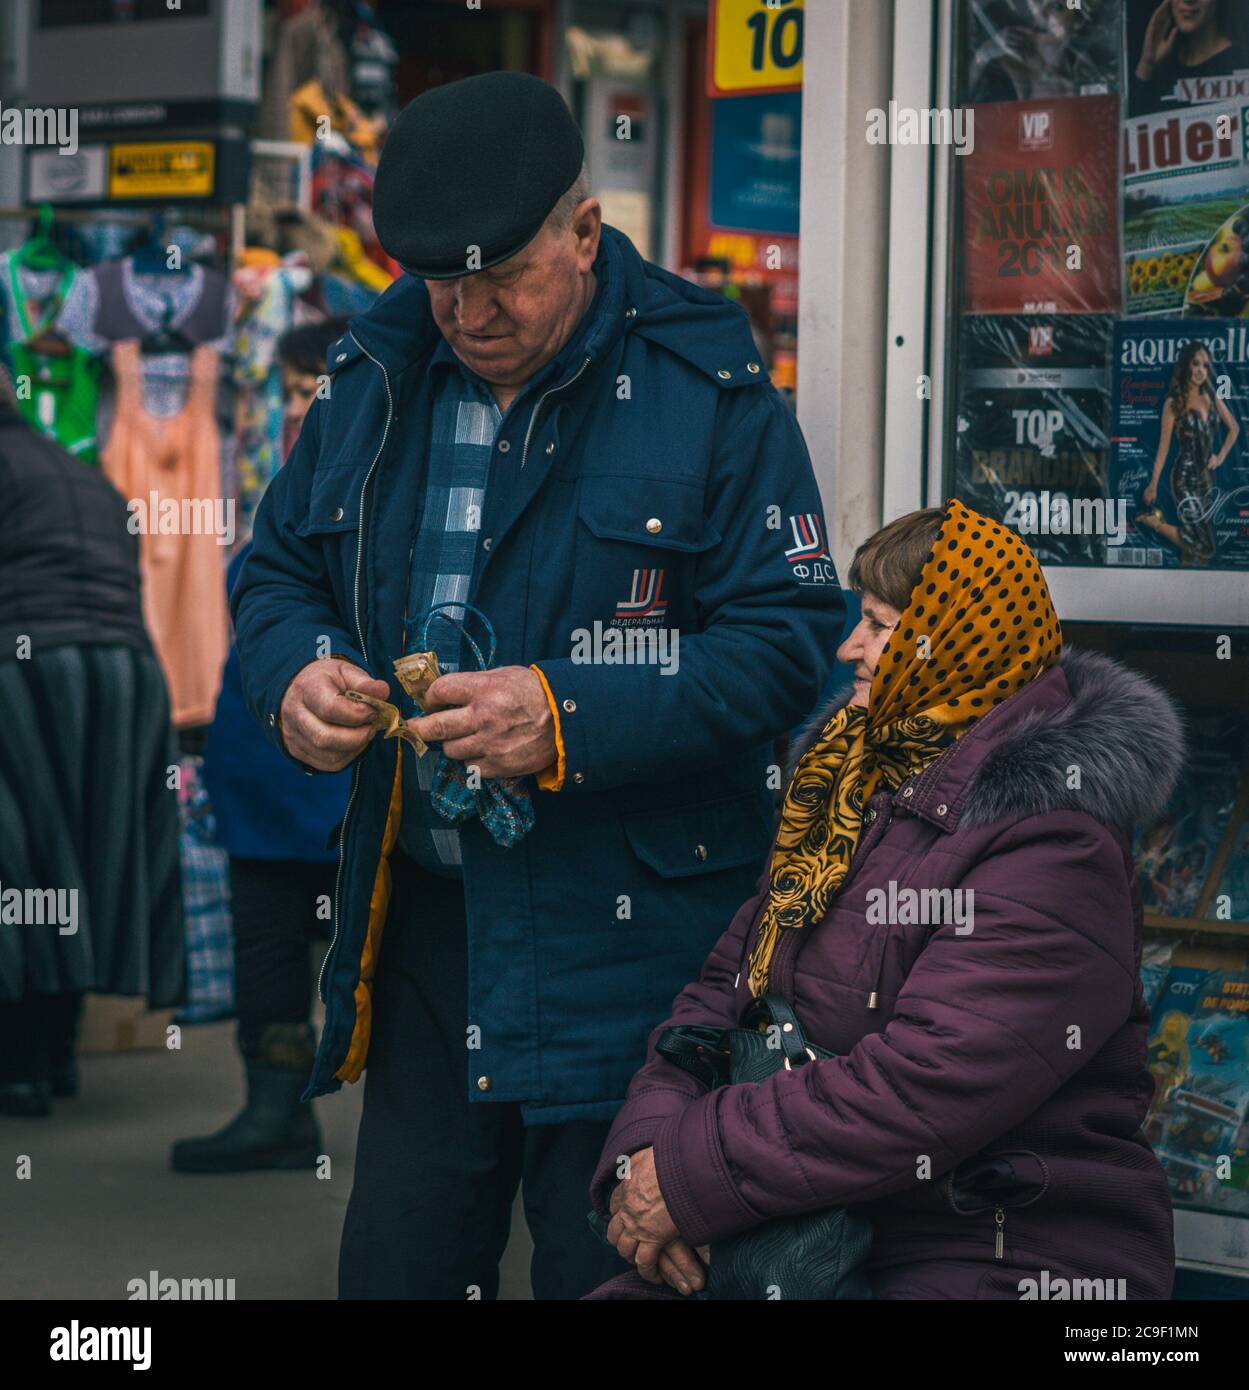 Moldavian people in a local market at Chisinau, Moldova. Stock Photo